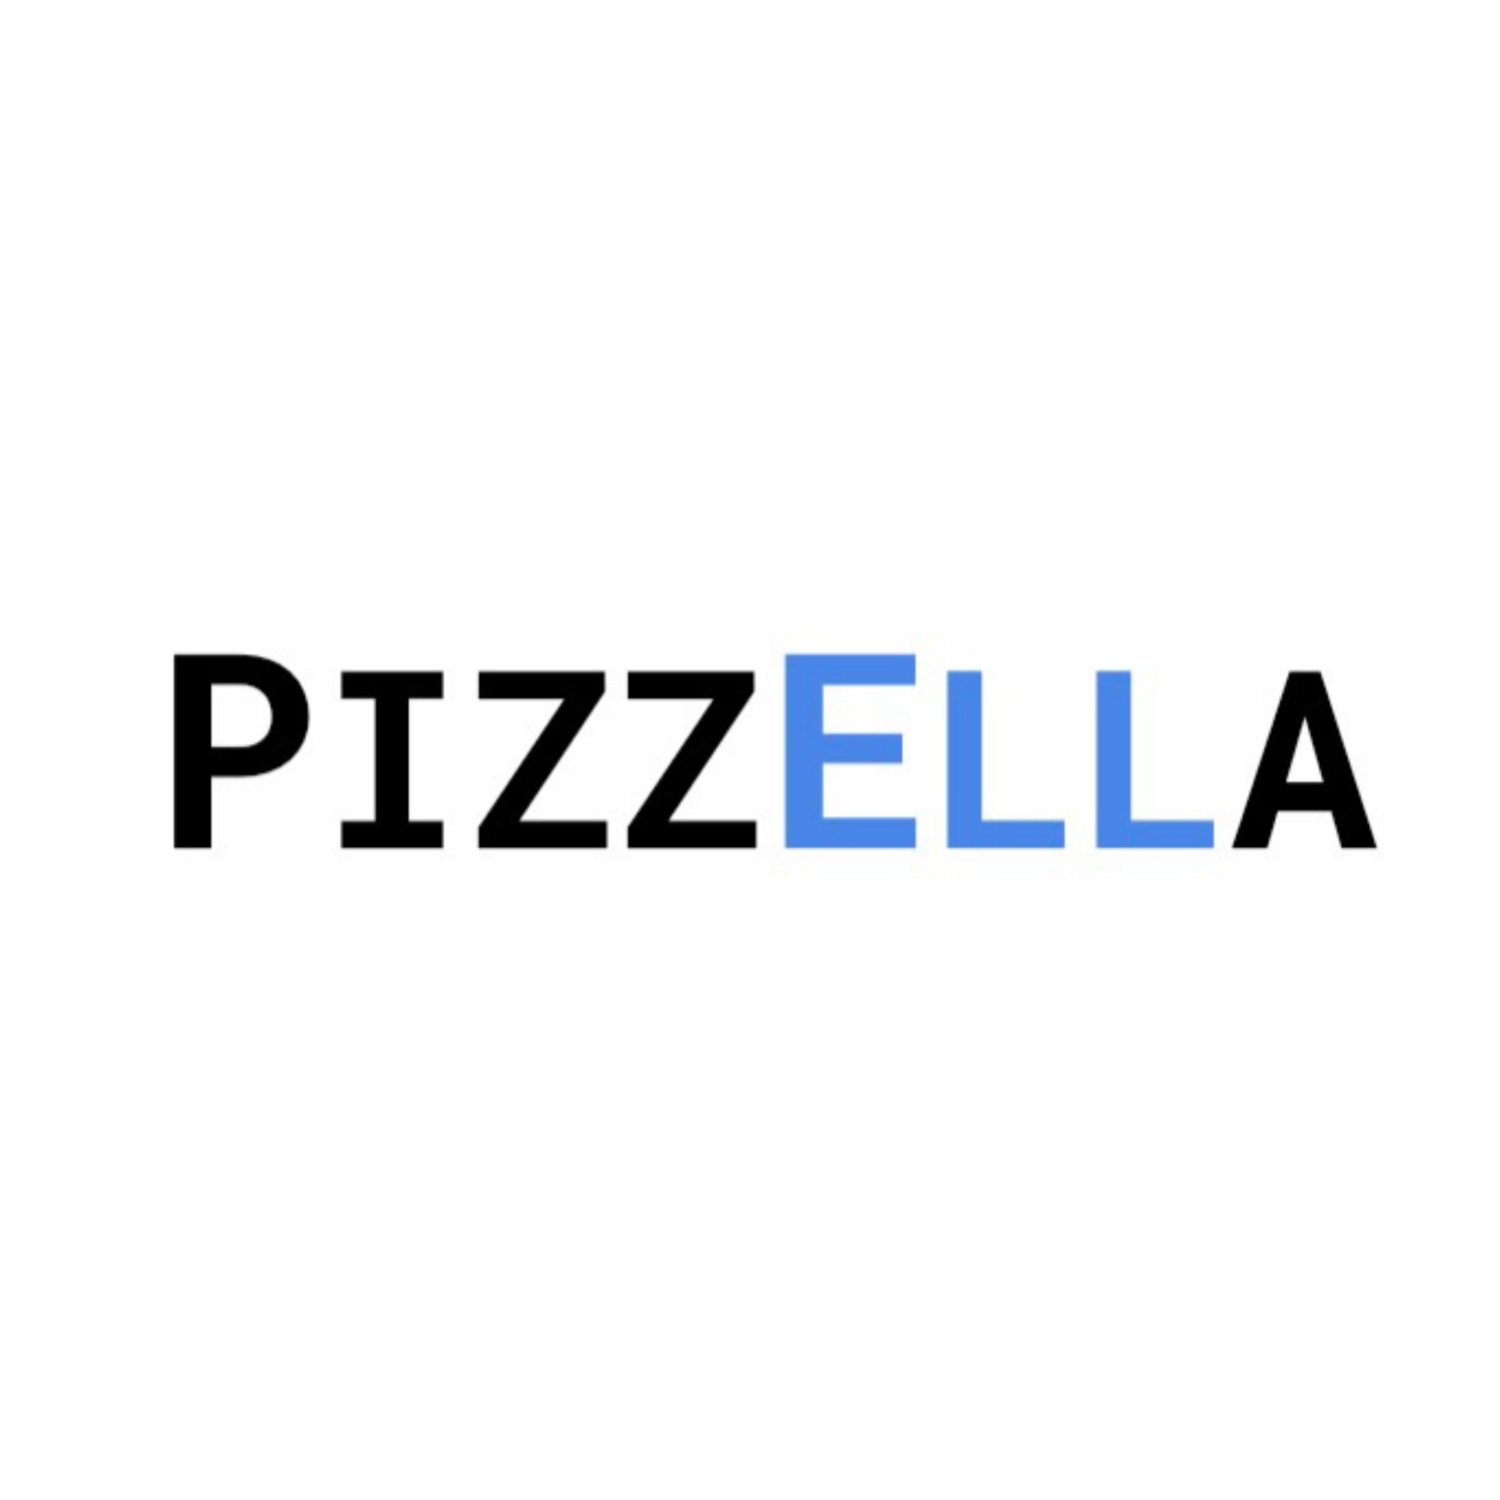 PizzElla